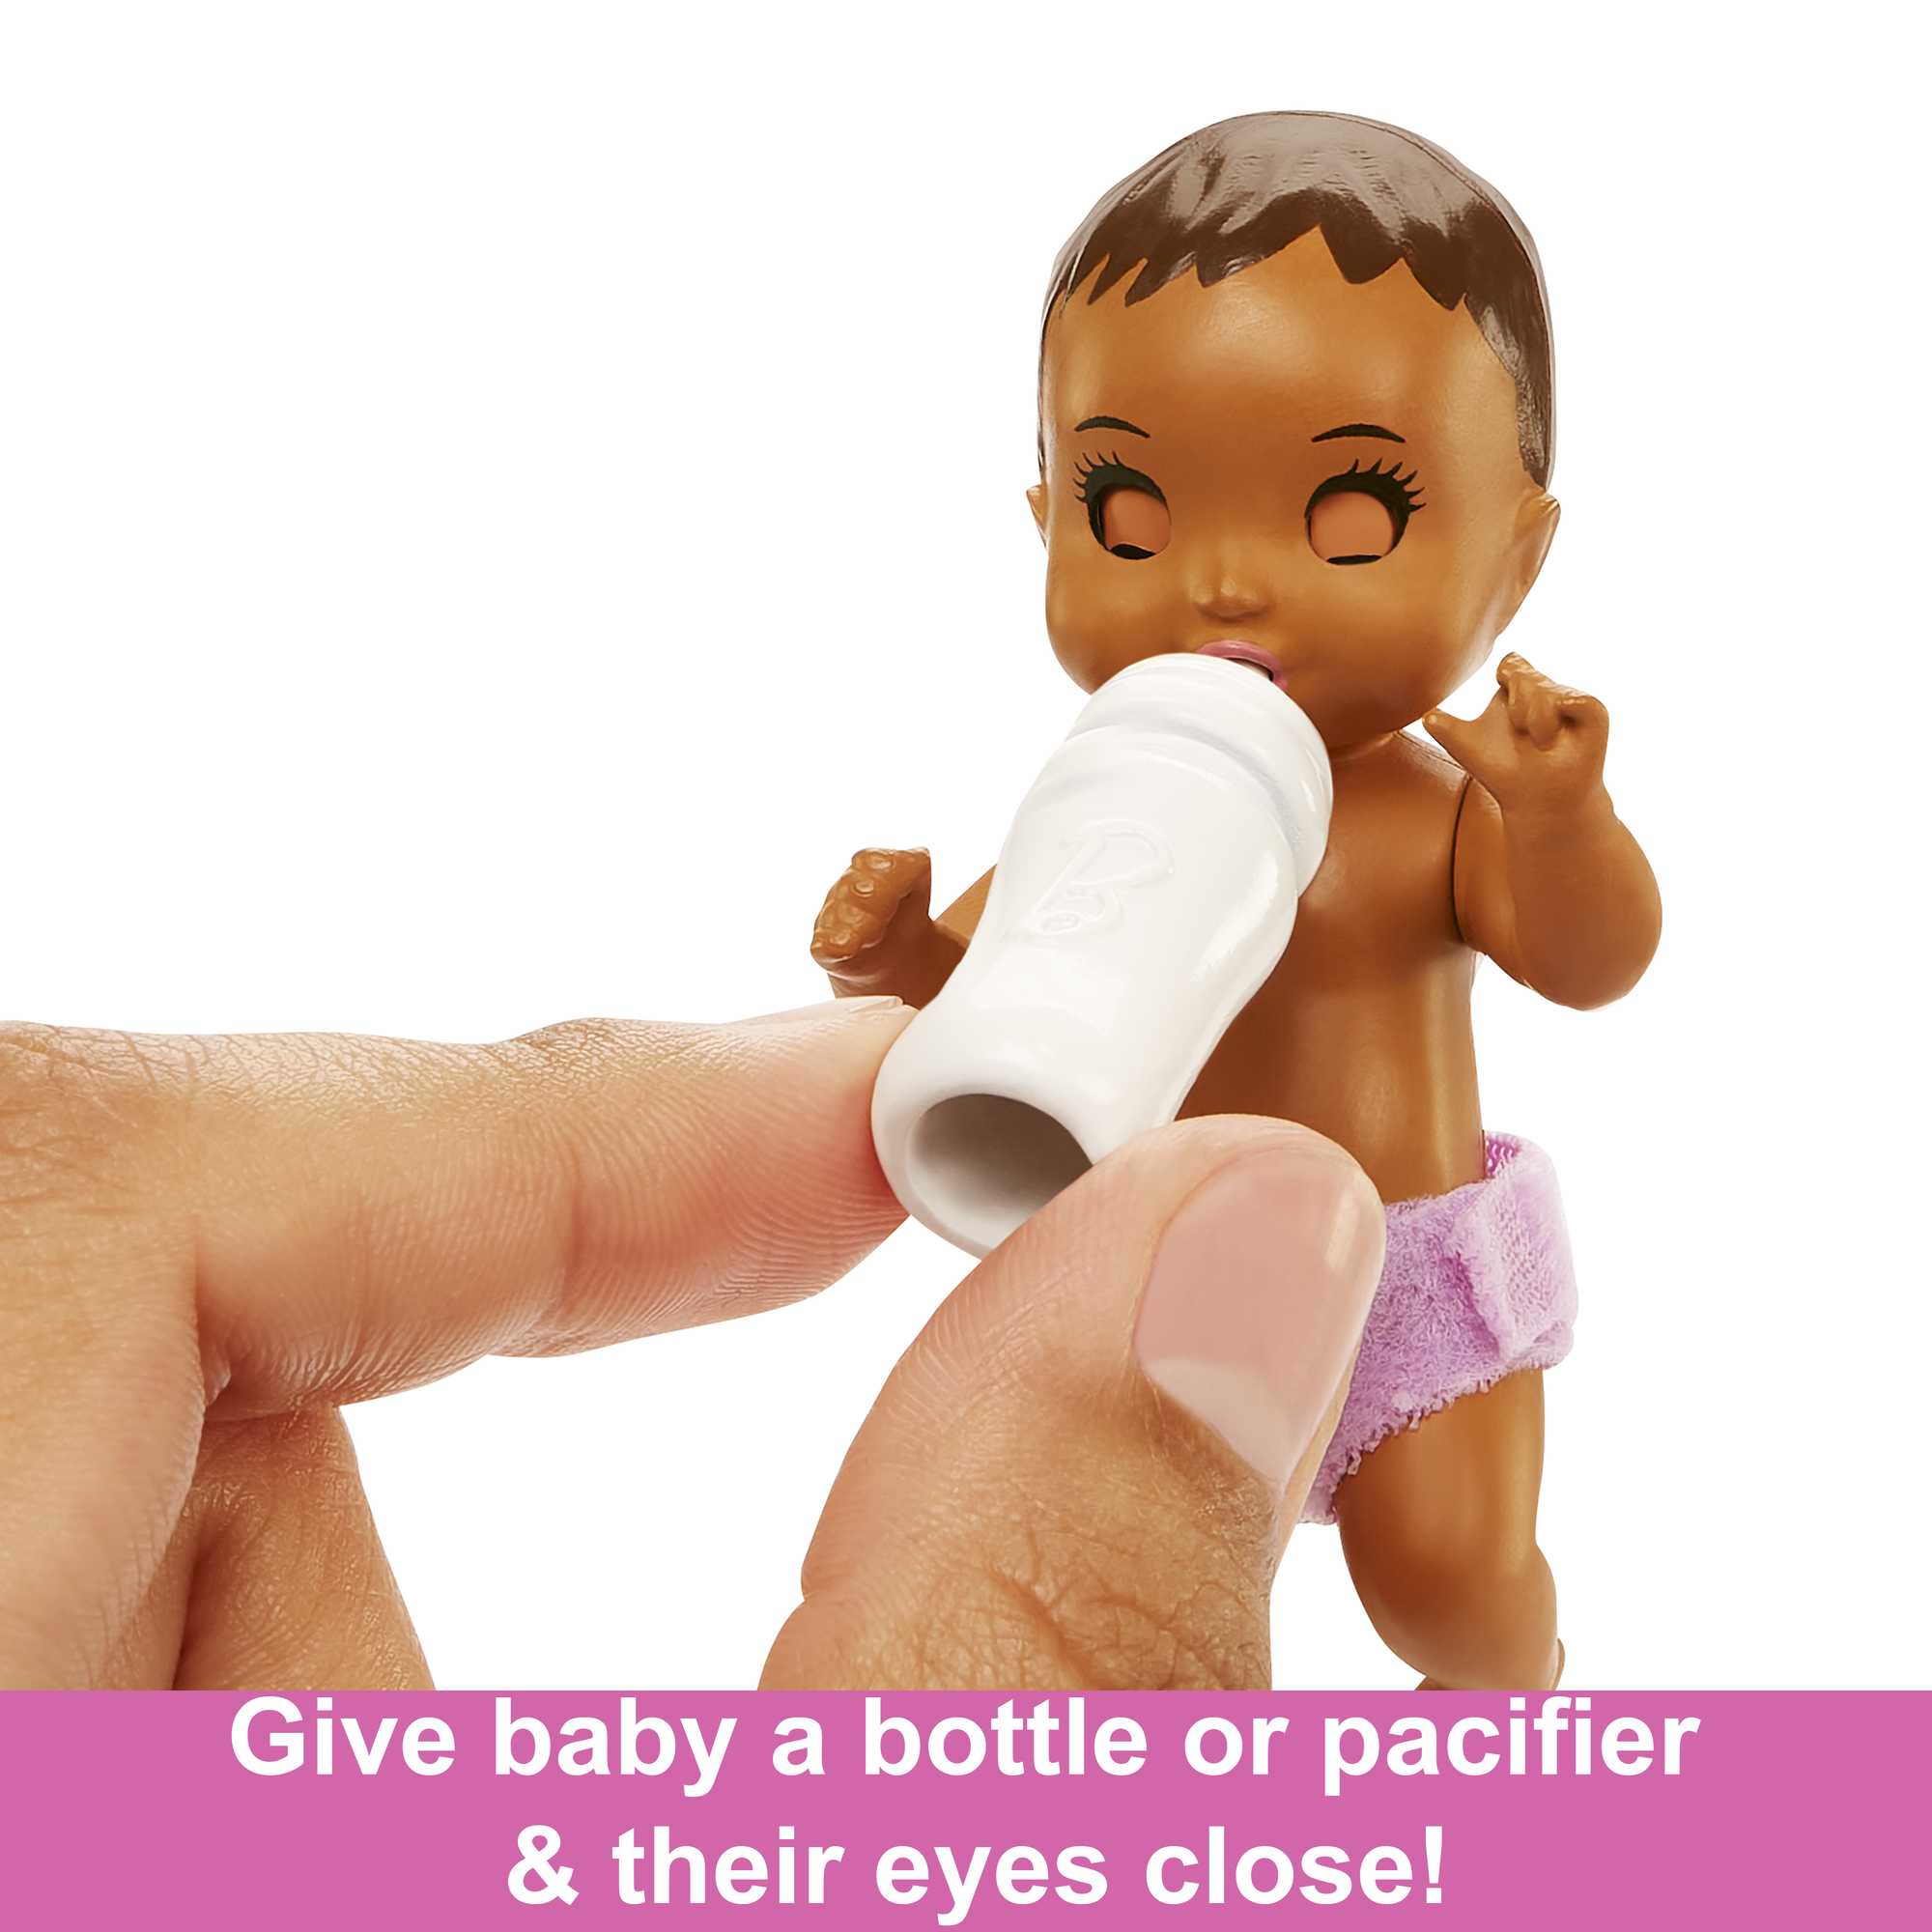 Barbie® – Skipper® Baby-Sitter – Assortiment Bébé et Accessoires, GHV83